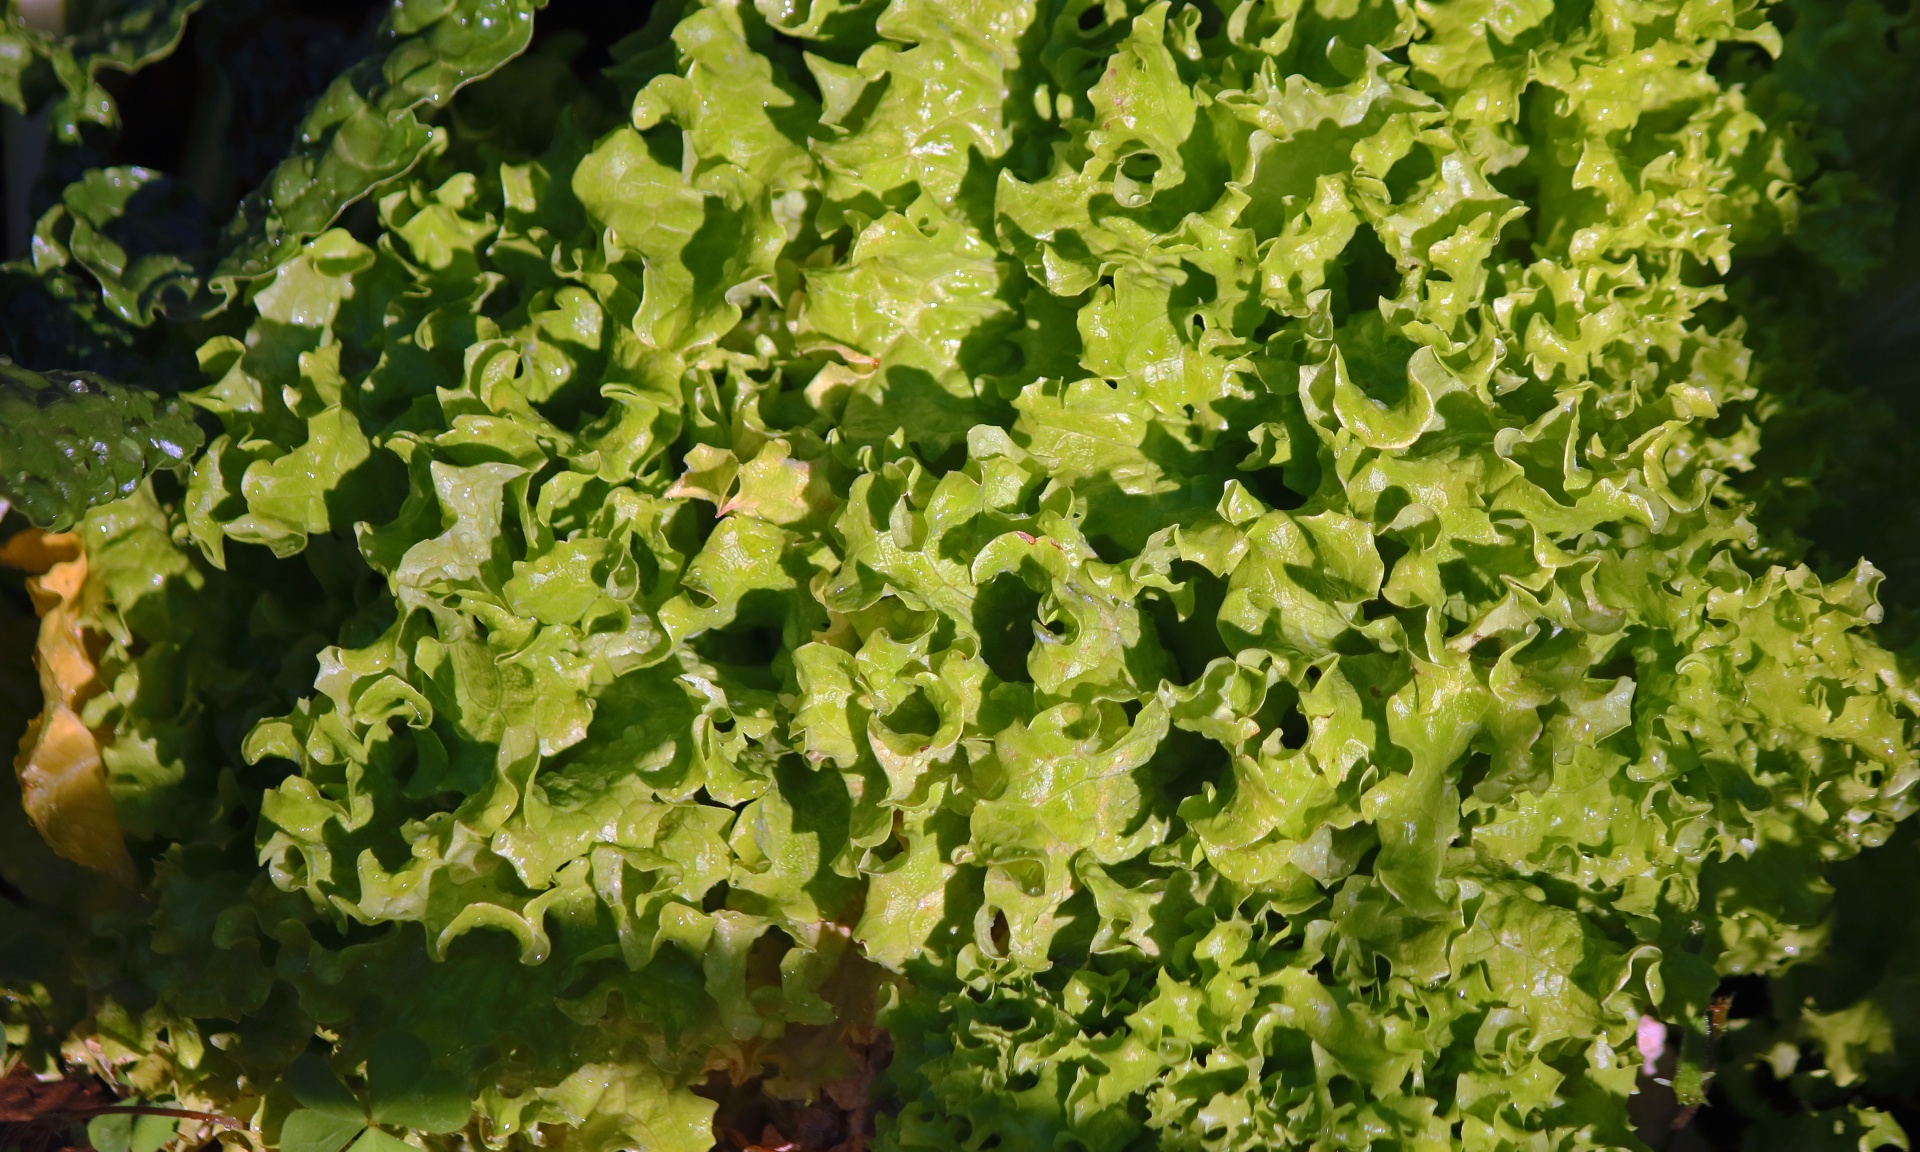 green curly leaf lettuce in a garden